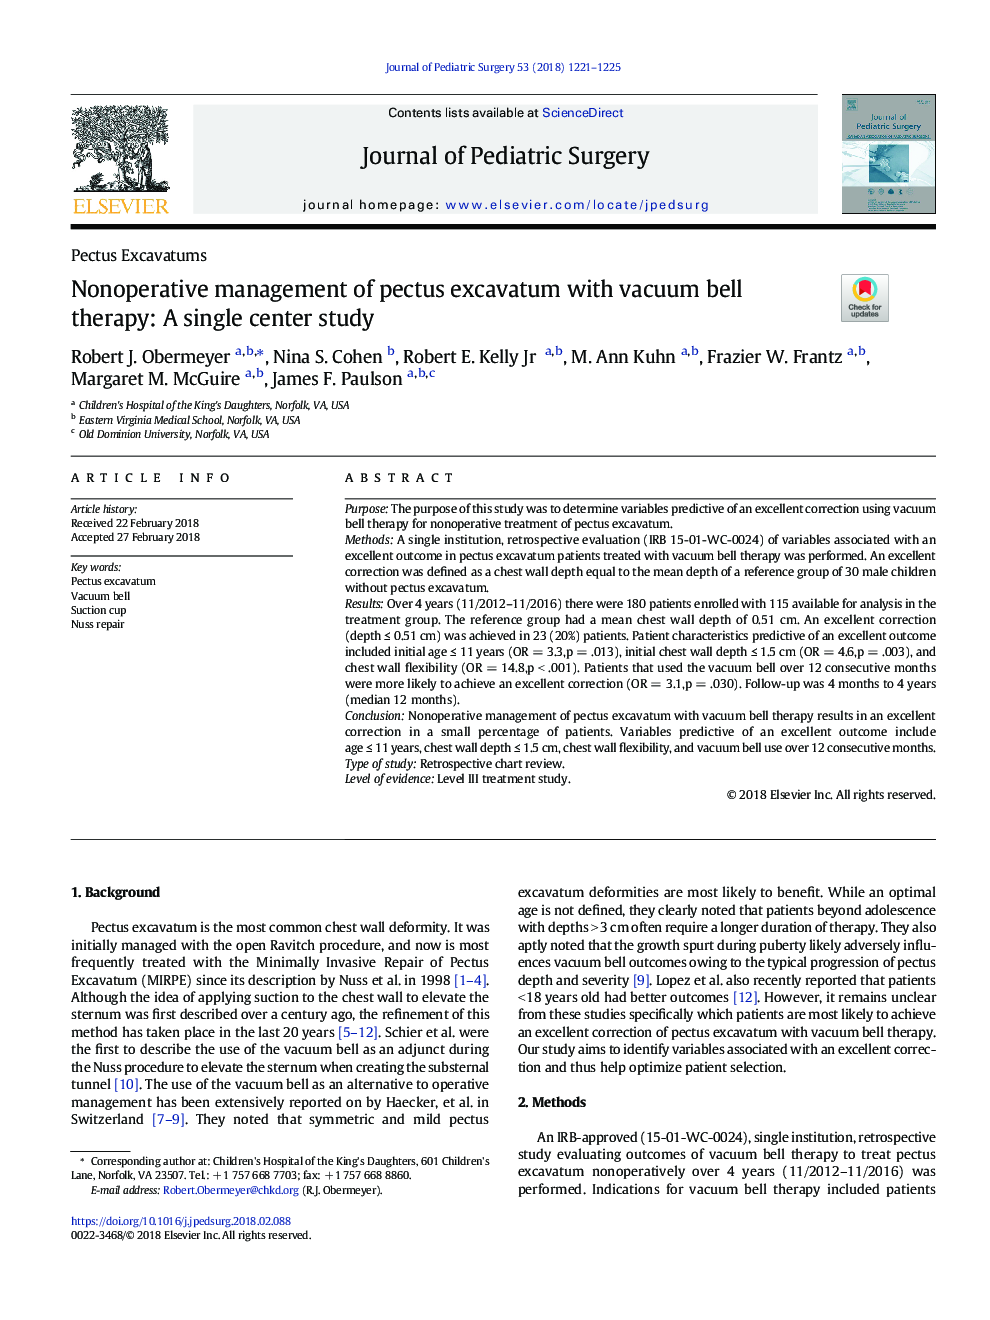 Nonoperative management of pectus excavatum with vacuum bell therapy: A single center study